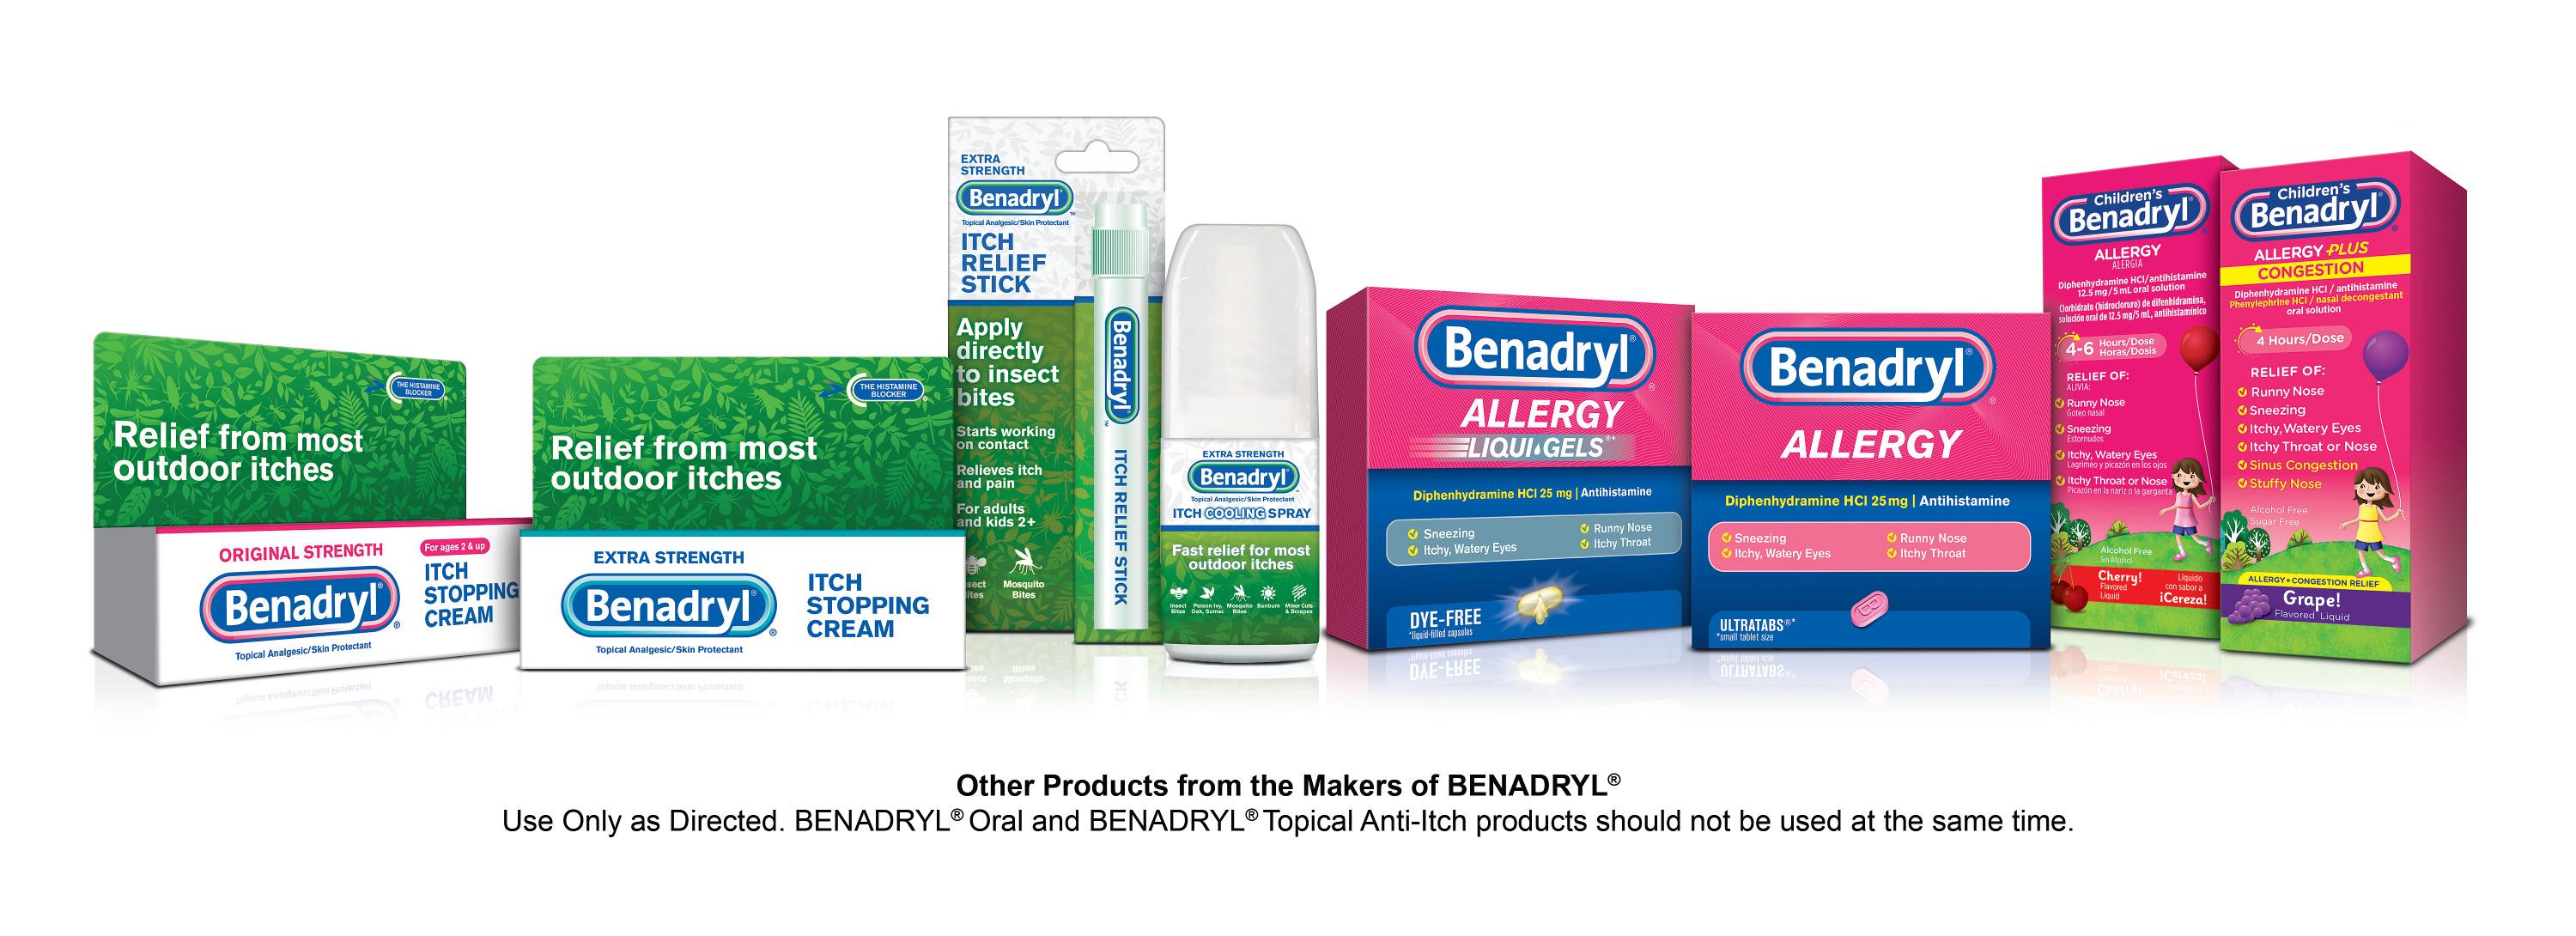 Amazon.com: Benadryl Allergy Ultratabs Tablets, 100 Count ...